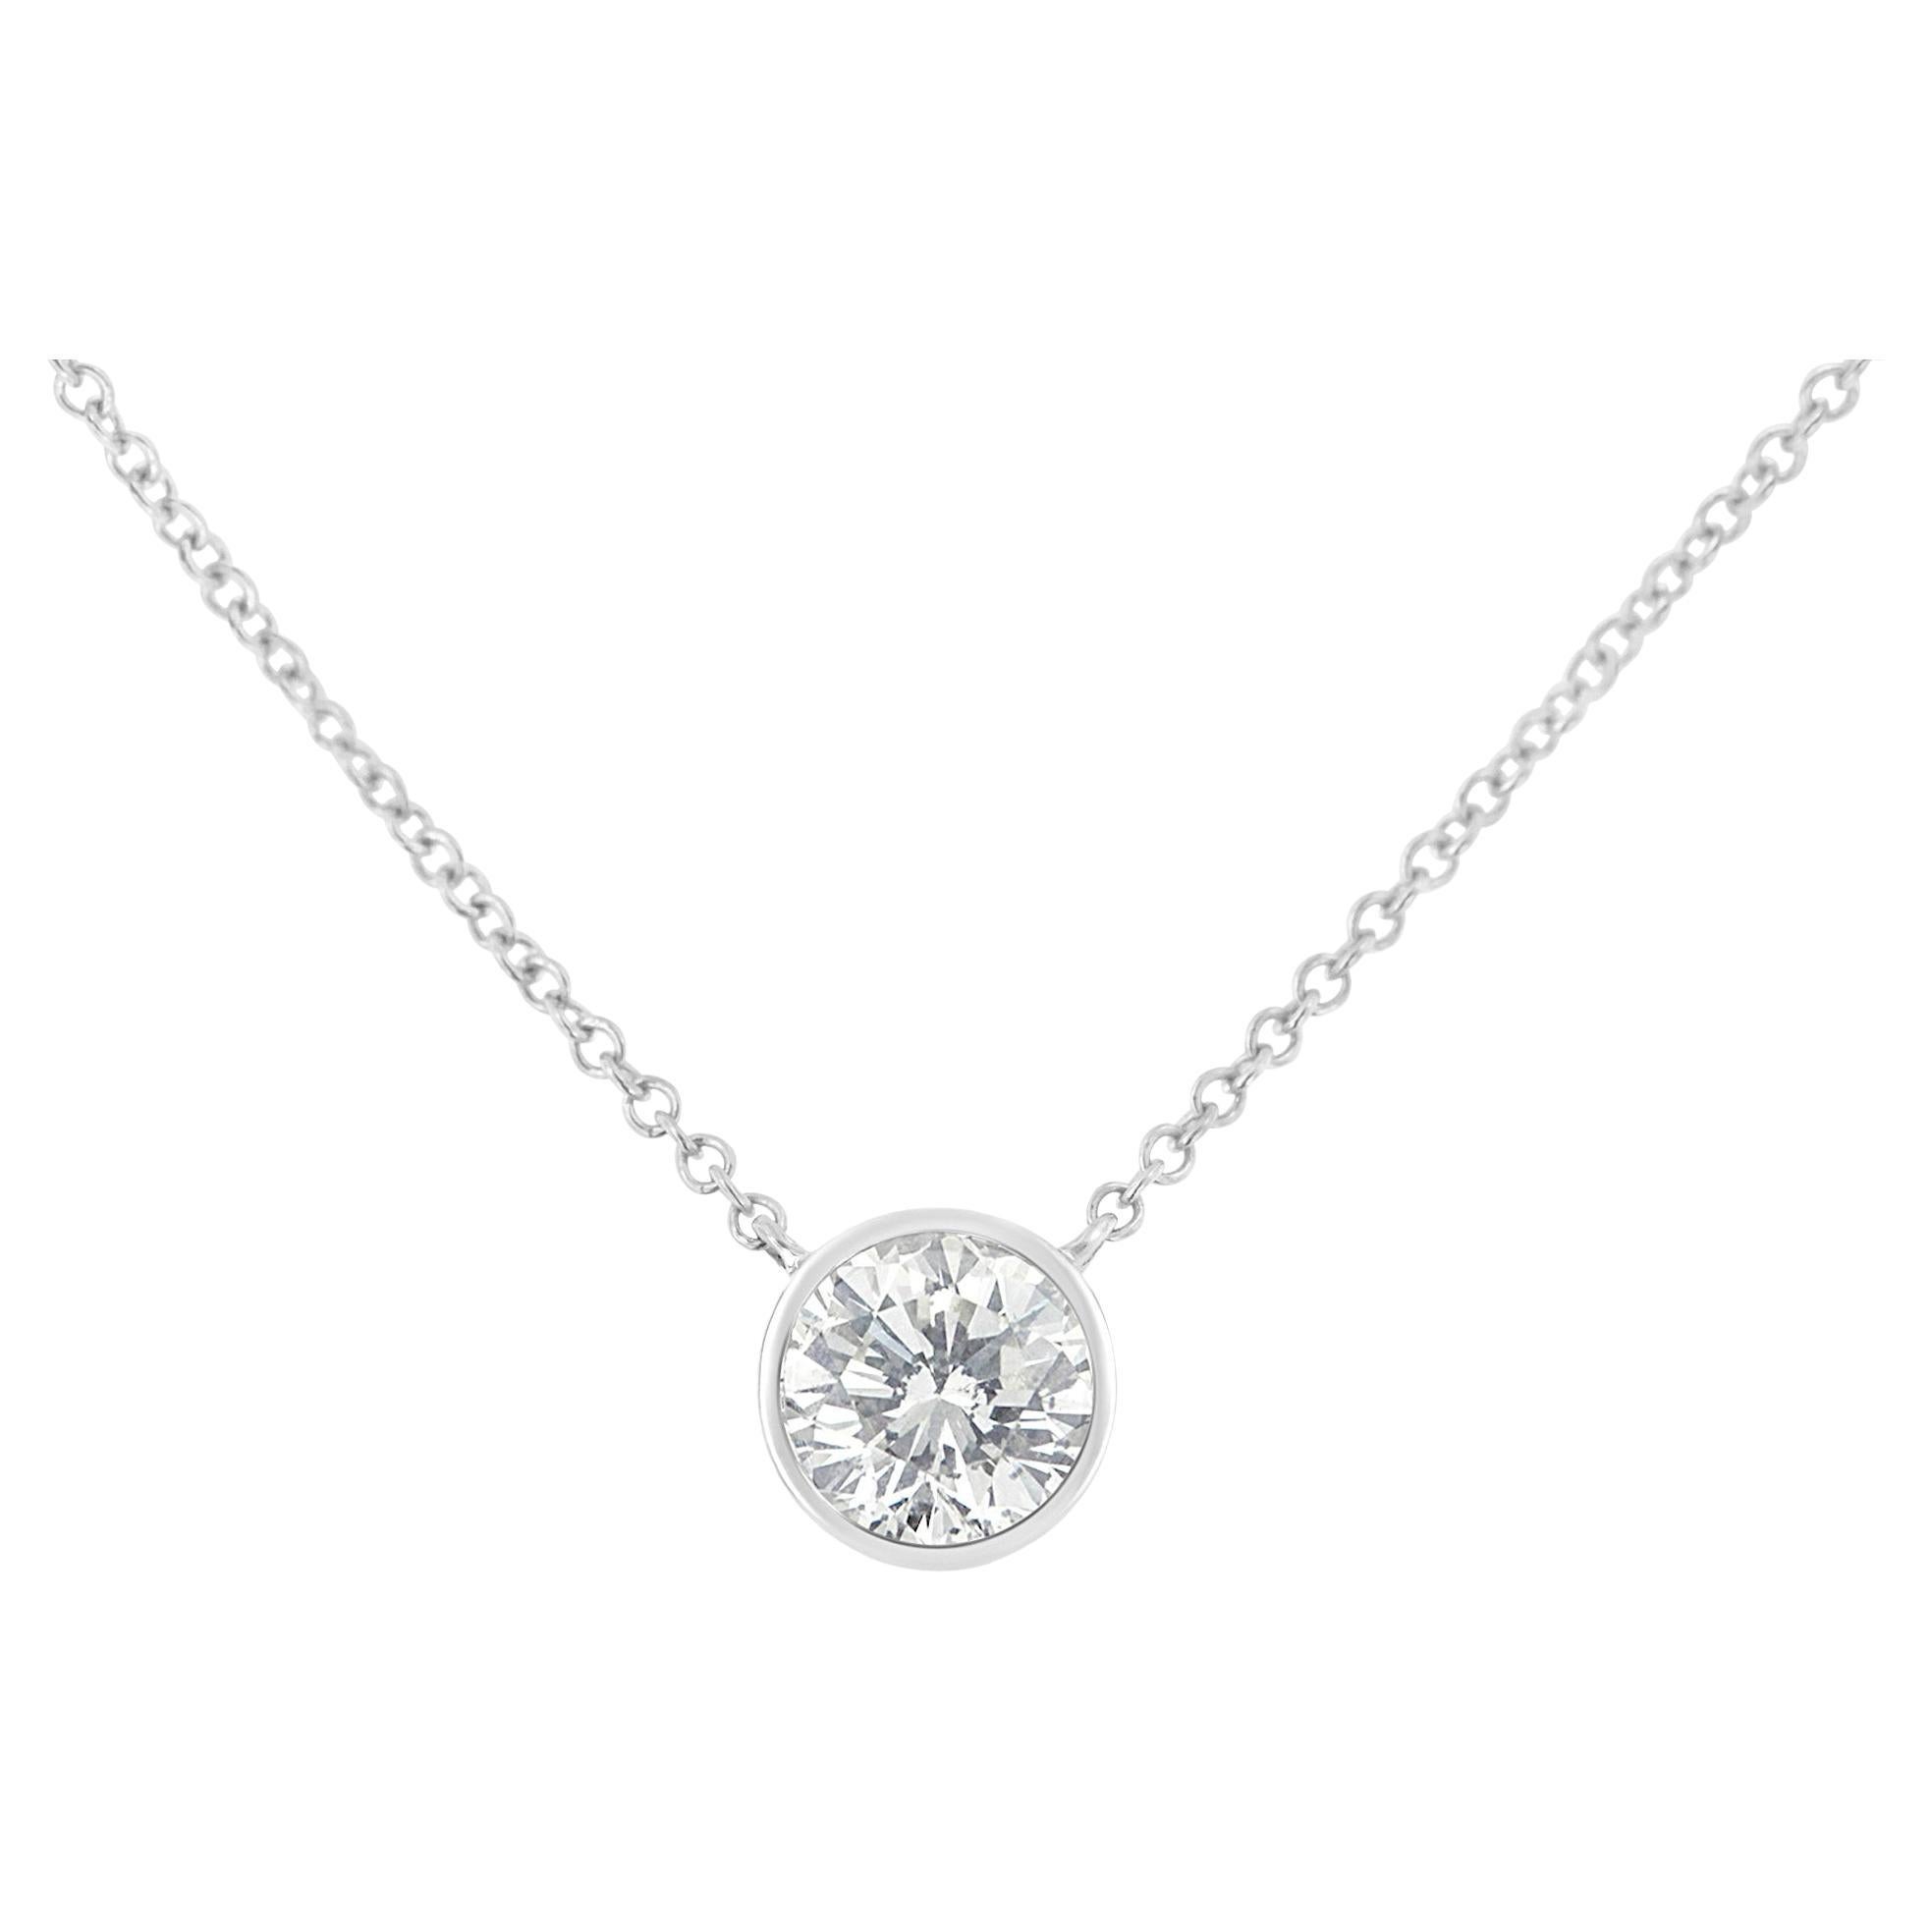 10K White Gold 3/10 Carat Round-Cut Diamond Modern Solitaire Pendant Necklace